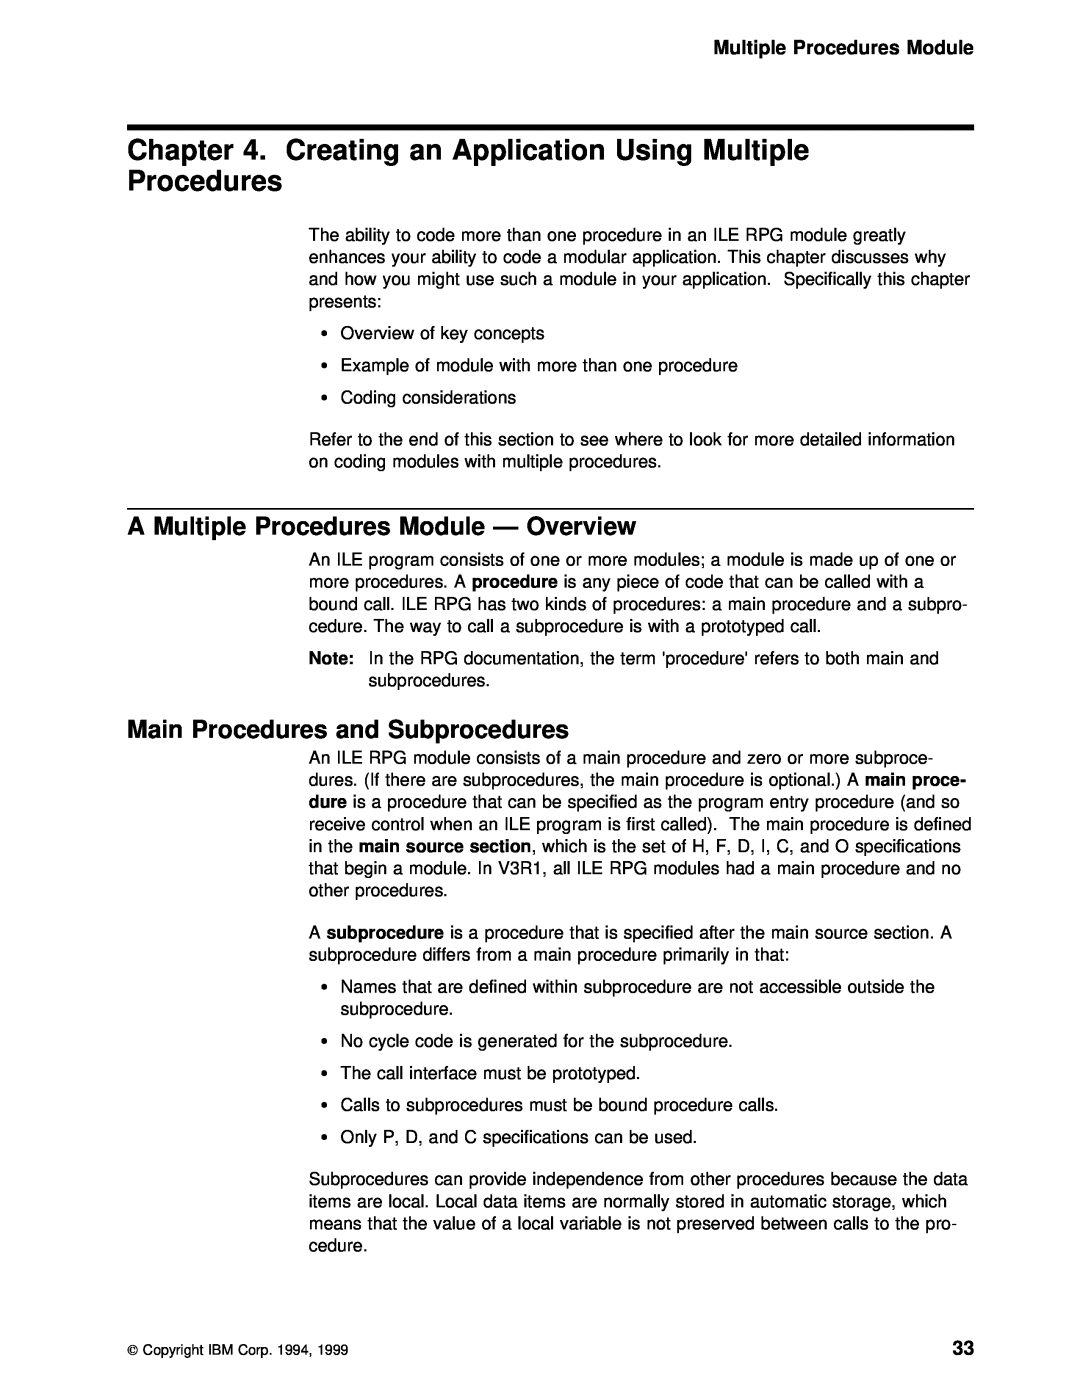 IBM AS/400 manual Creating an Application Using Multiple Procedures, Multiple Procedures Module 